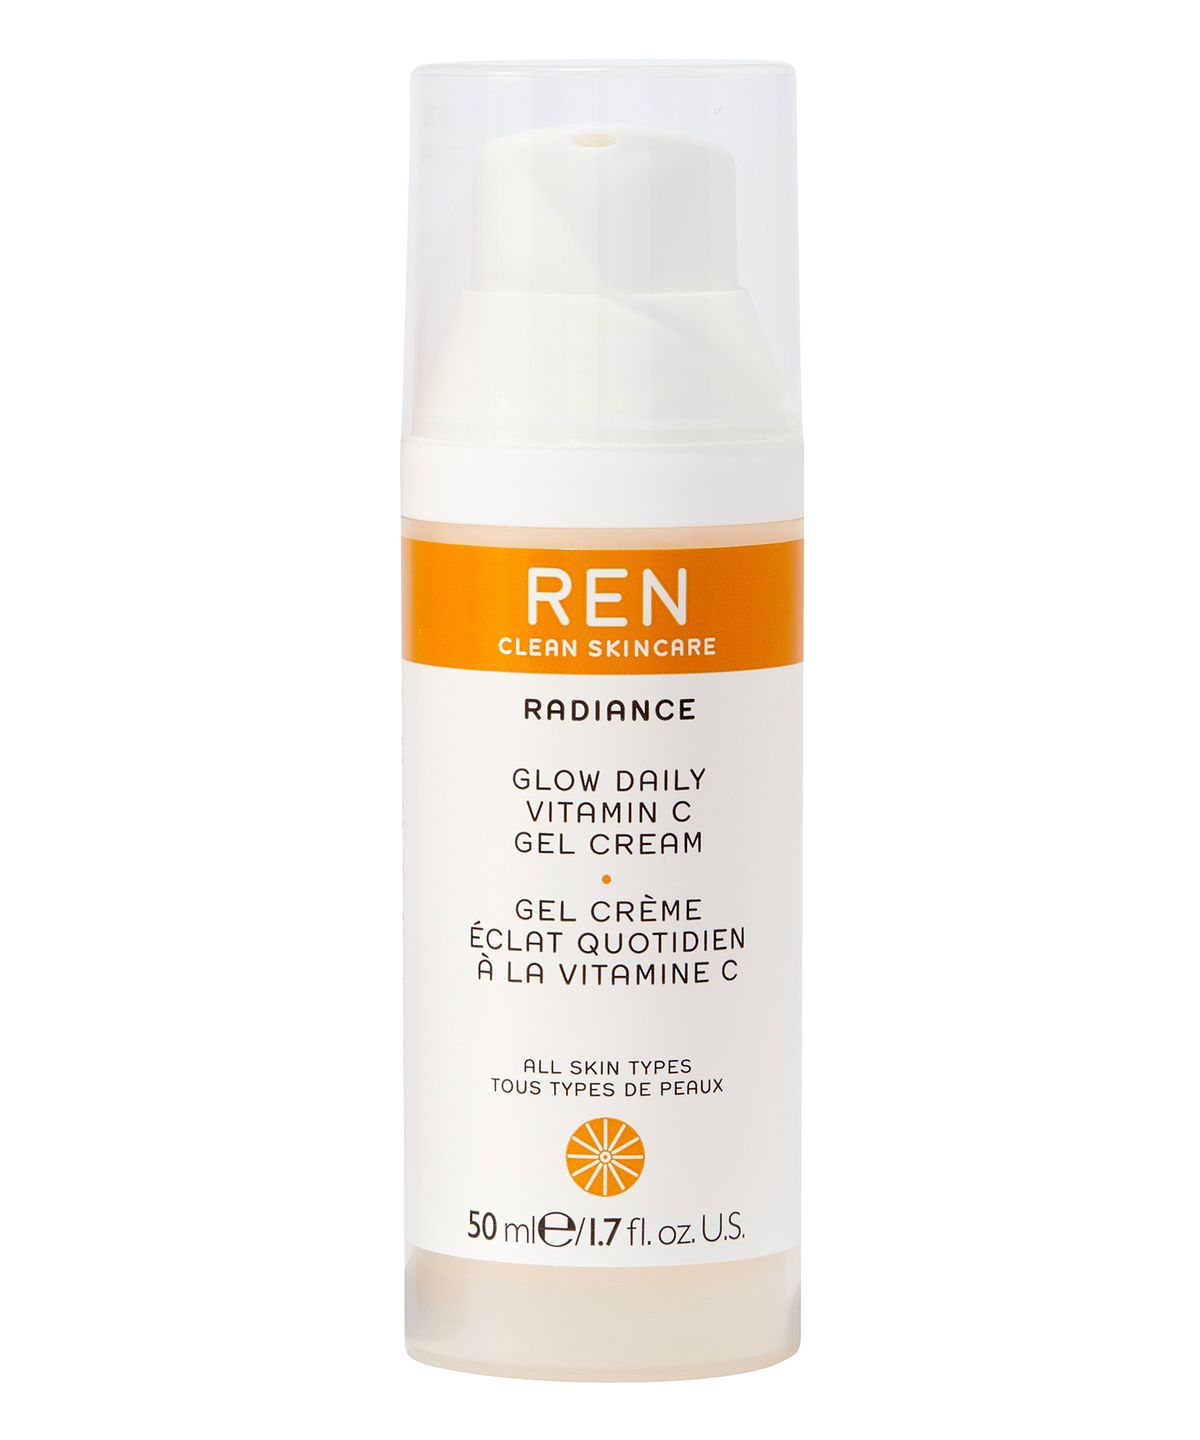 Ren Clean Skincare Glow Daily Vitamin C Gel Cream Muse Beauty